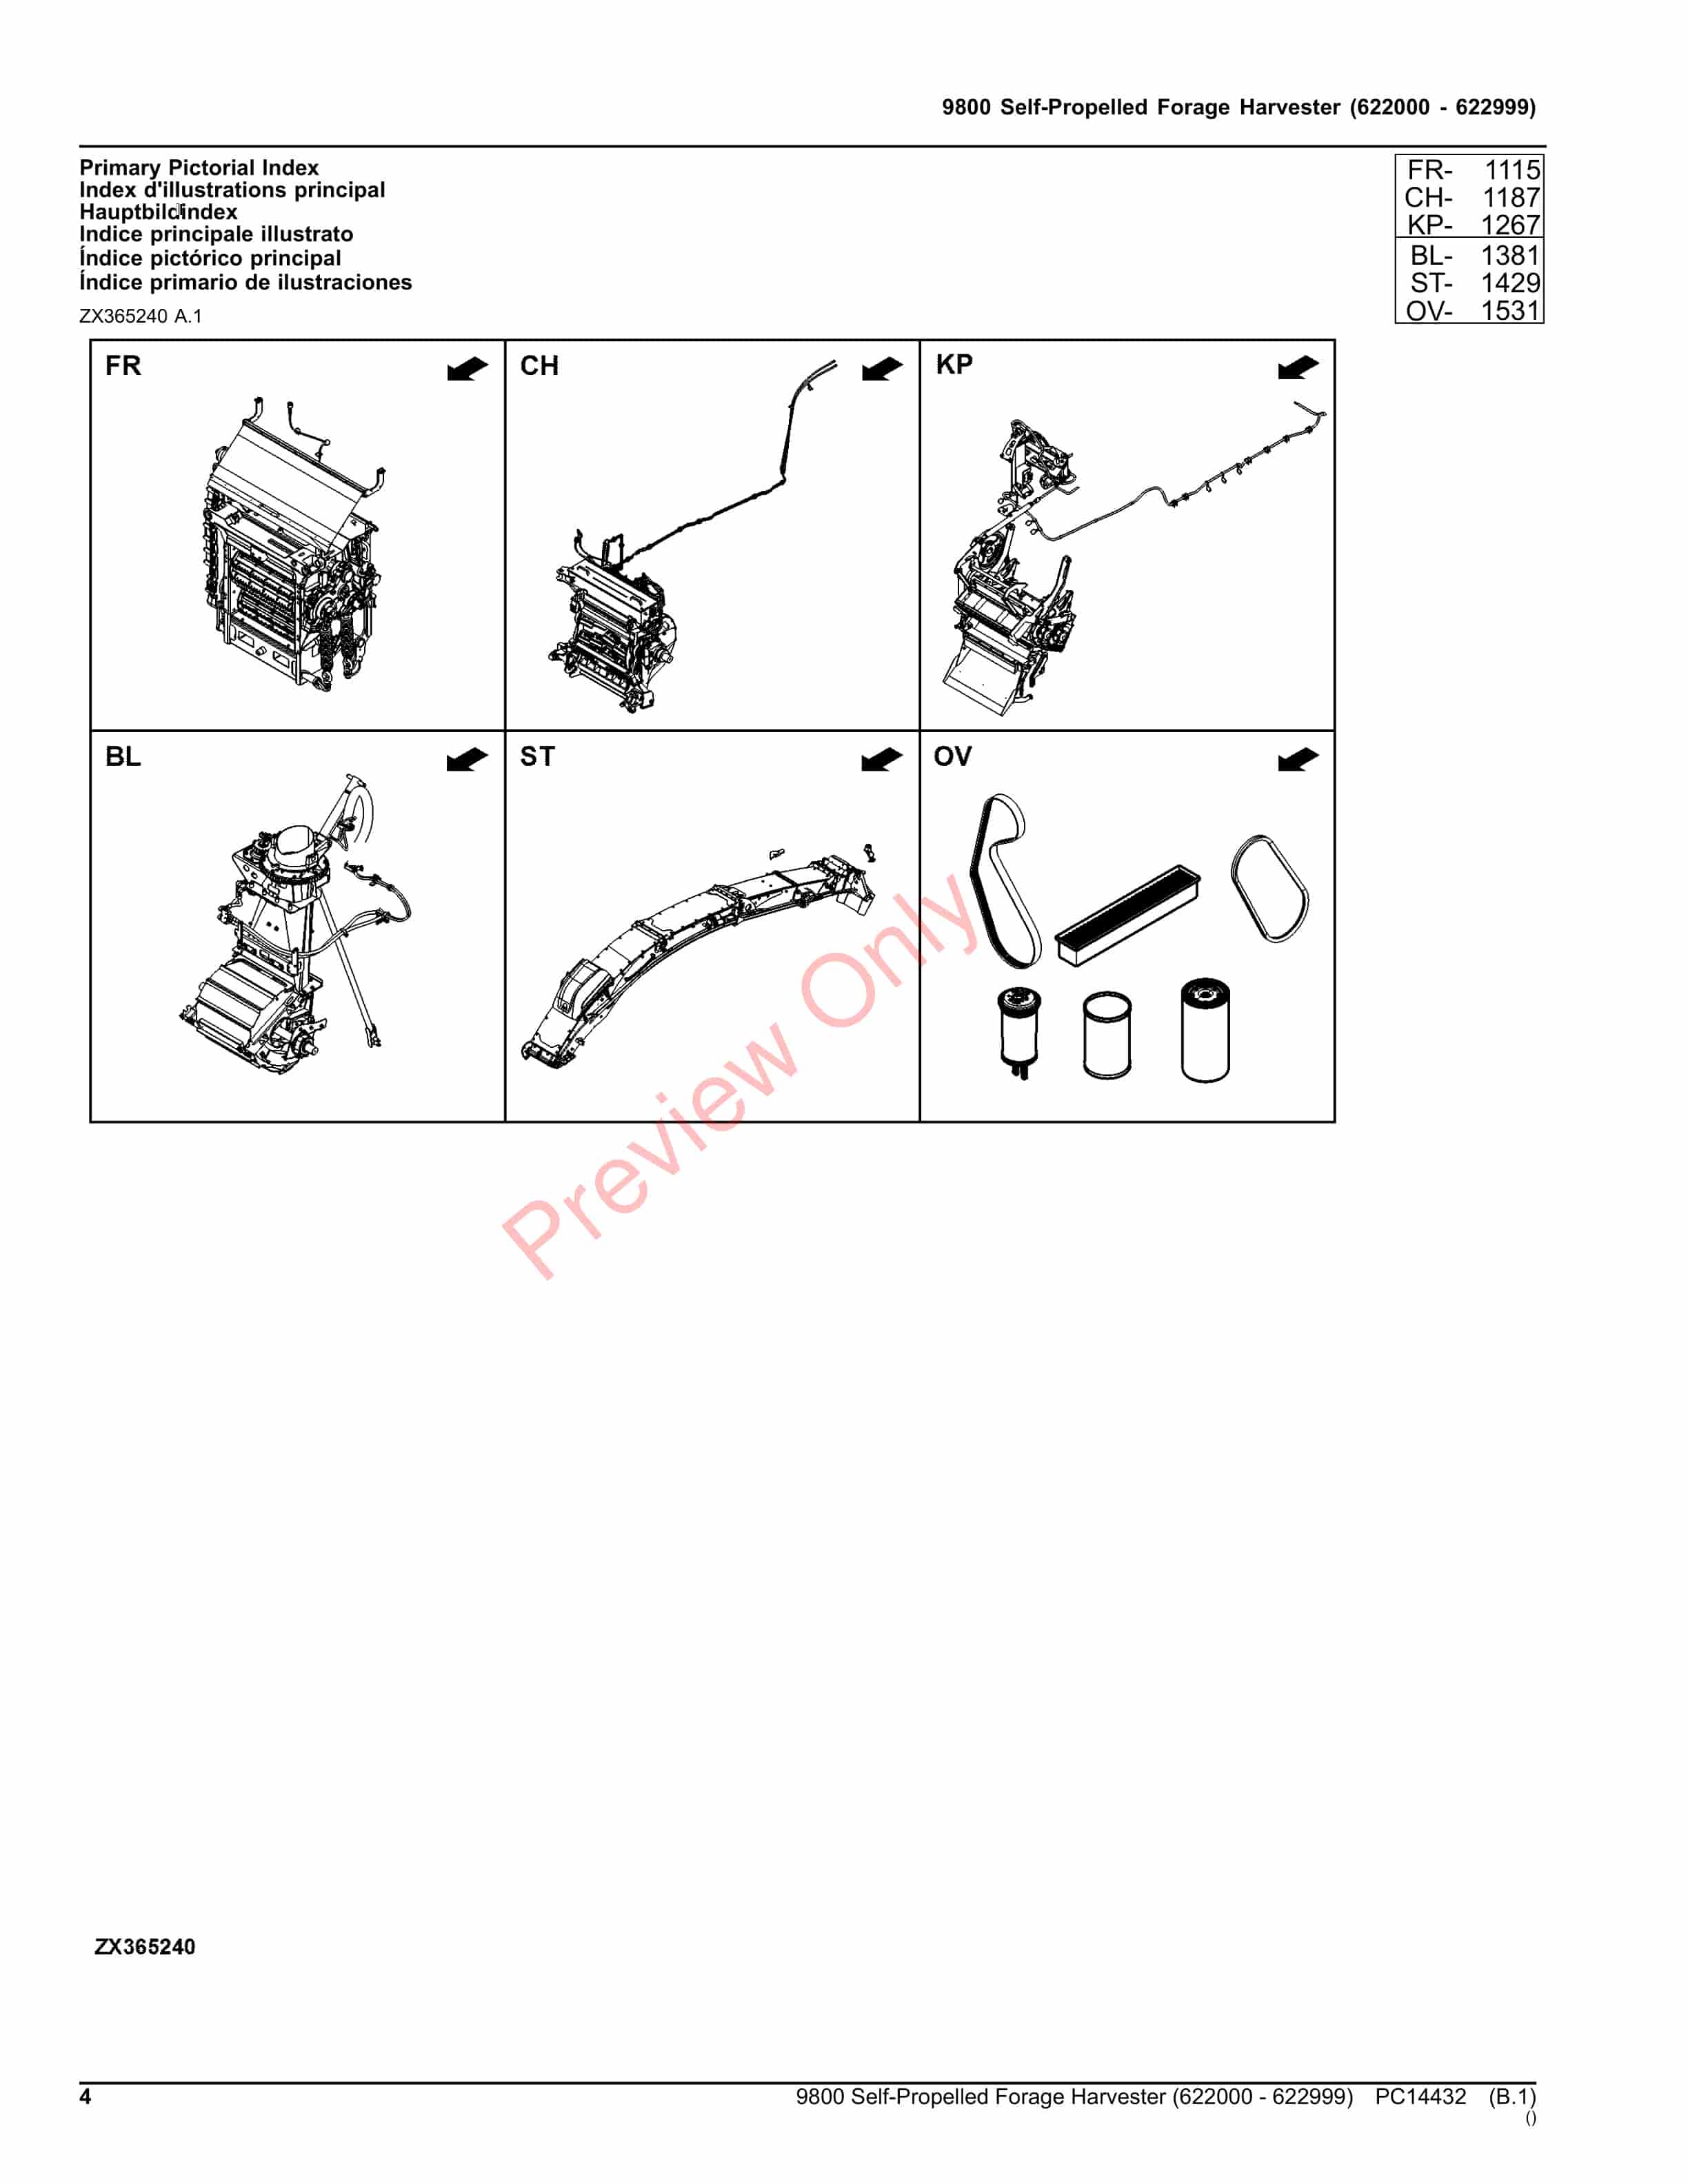 John Deere 9800 Self-Propelled Forage Harvester (622000 &#8211; 622999) Parts Catalog PC14432 24AUG23-4